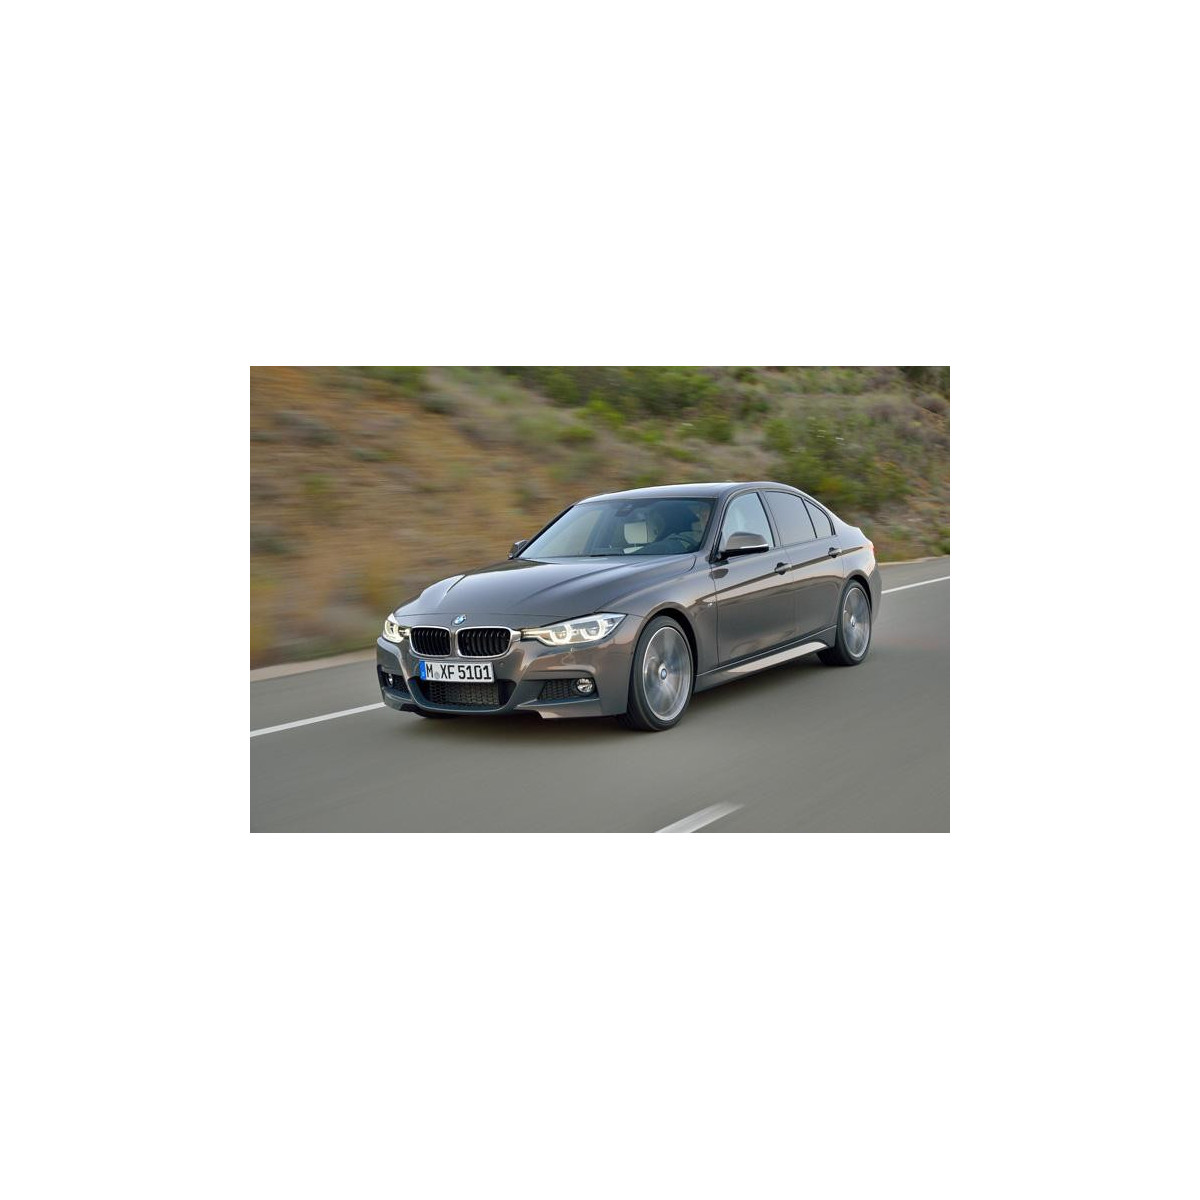 BODY KIT BMW F30 LCI (MT), 05/2015- M-TECHNIK